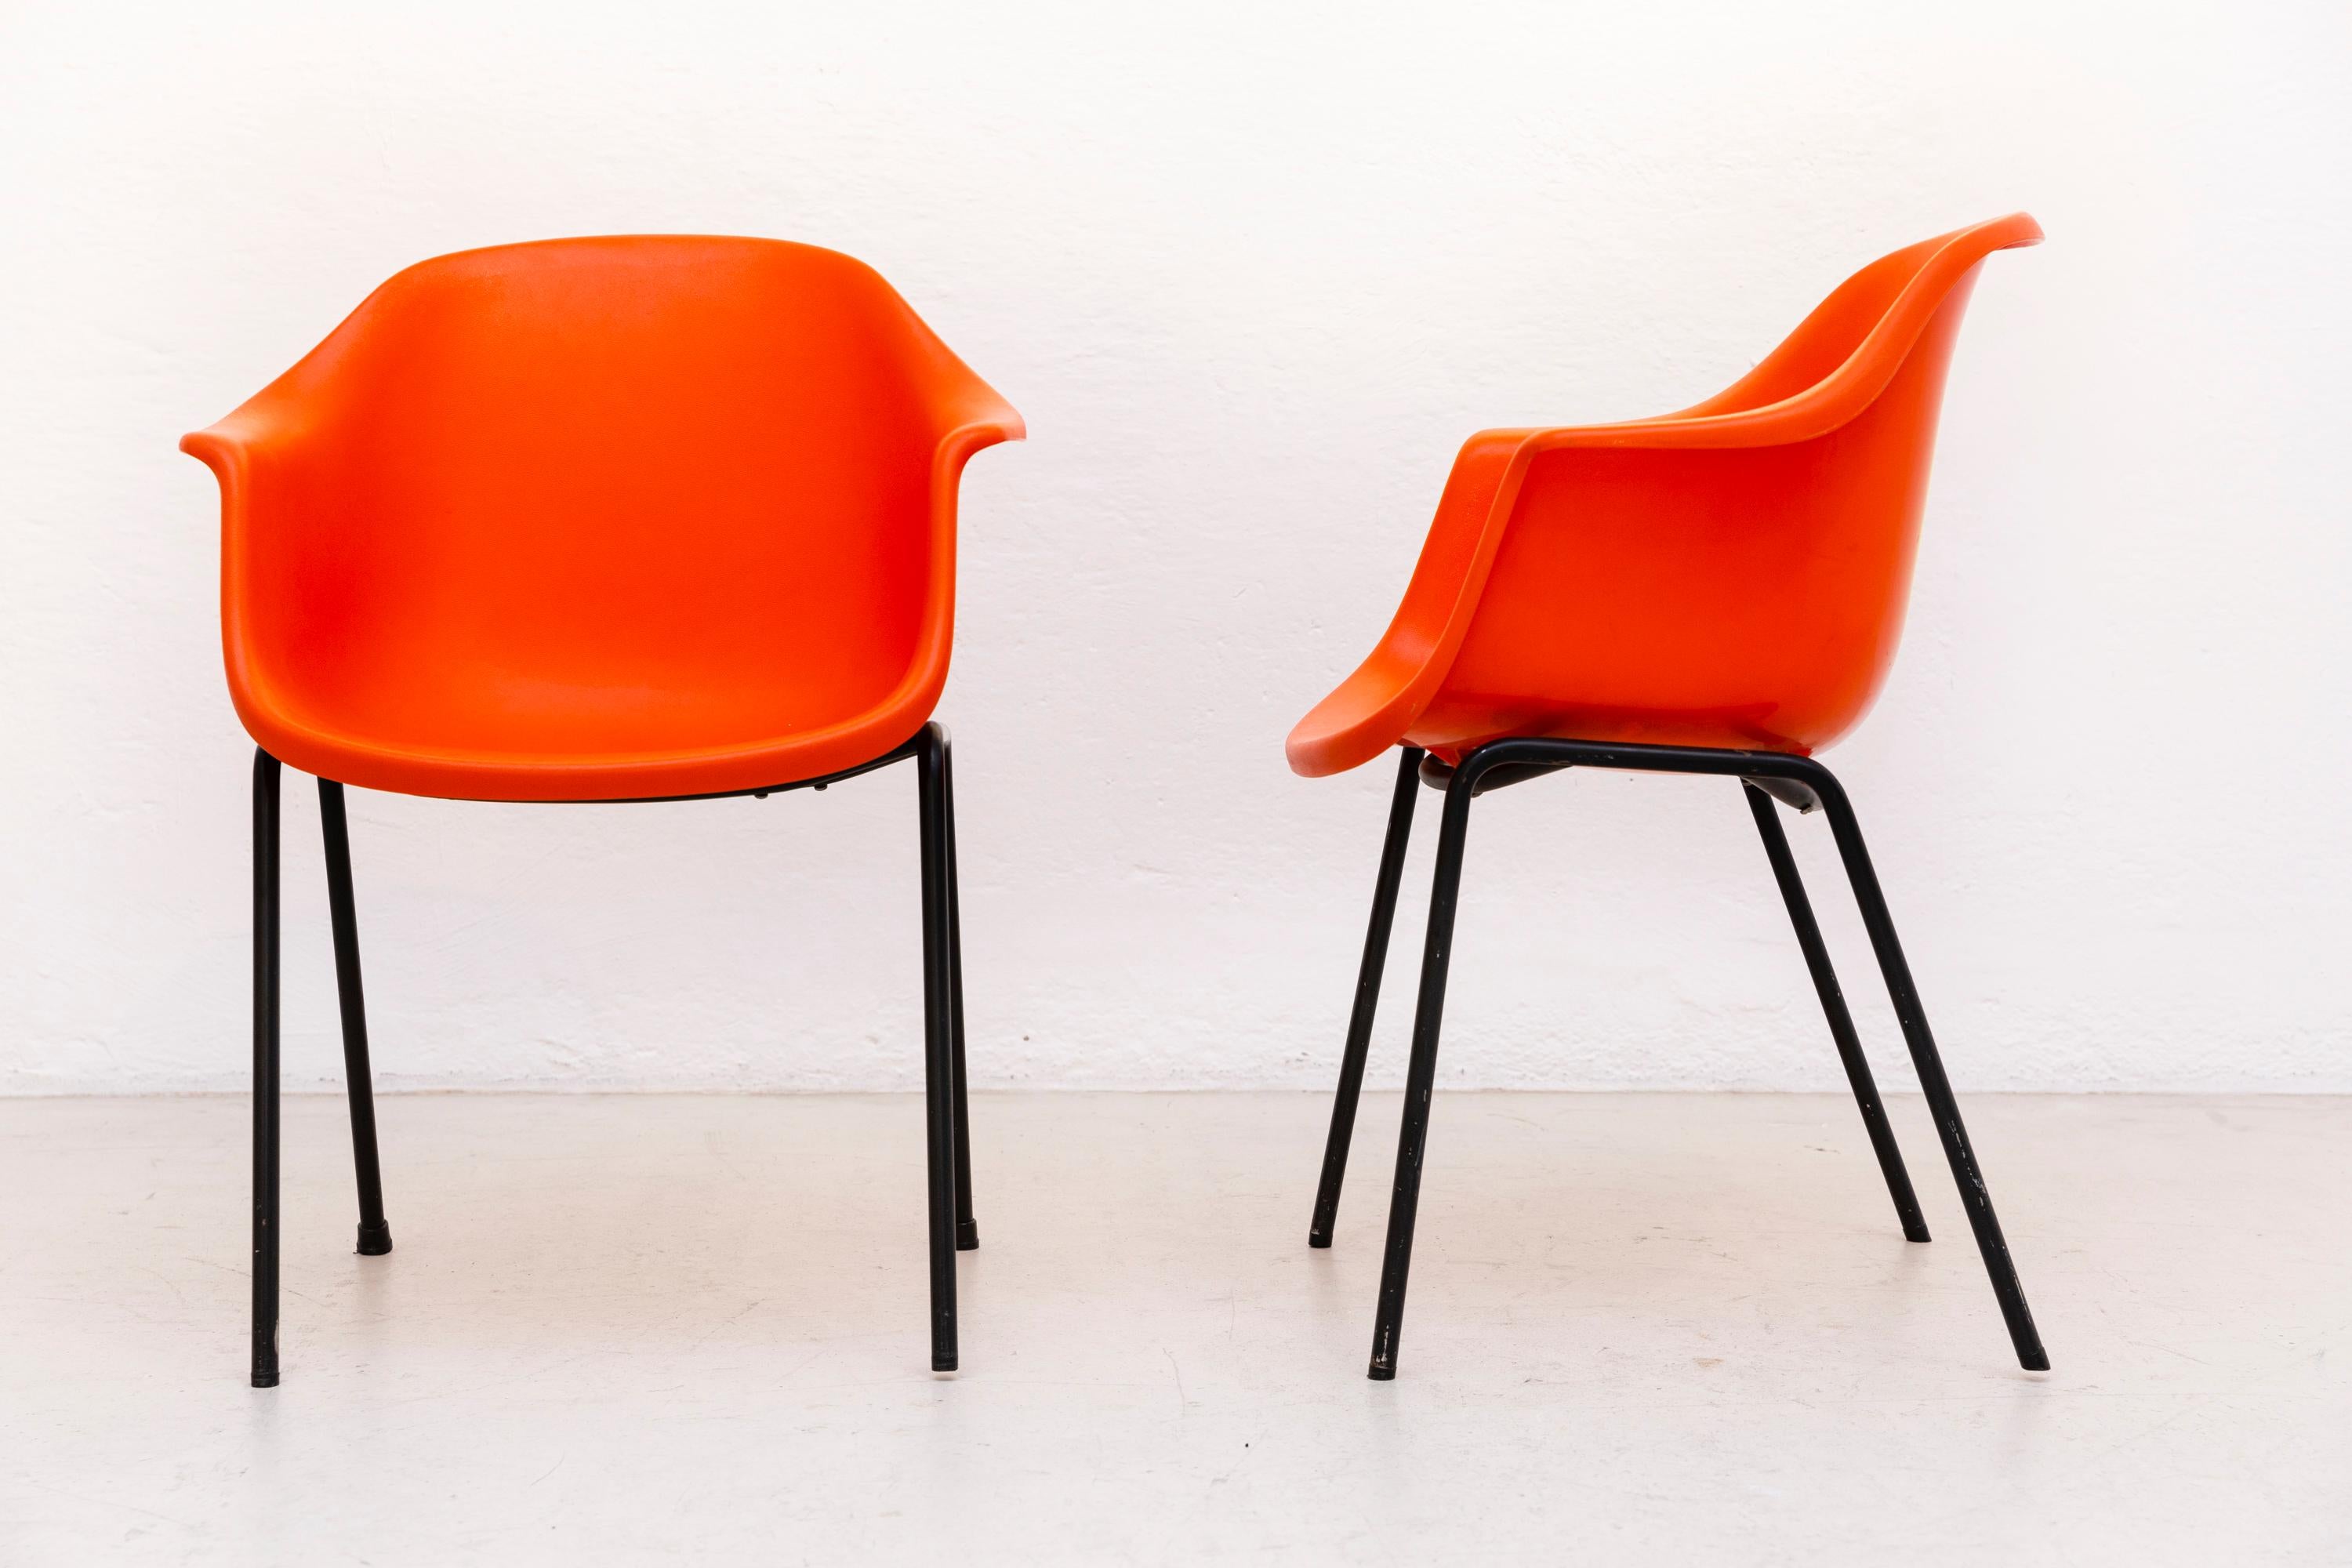 A set of 10 Polaris armchairs by Eero Aarnio for Asko, designed in 1966.
Orange plastic, metal legs.